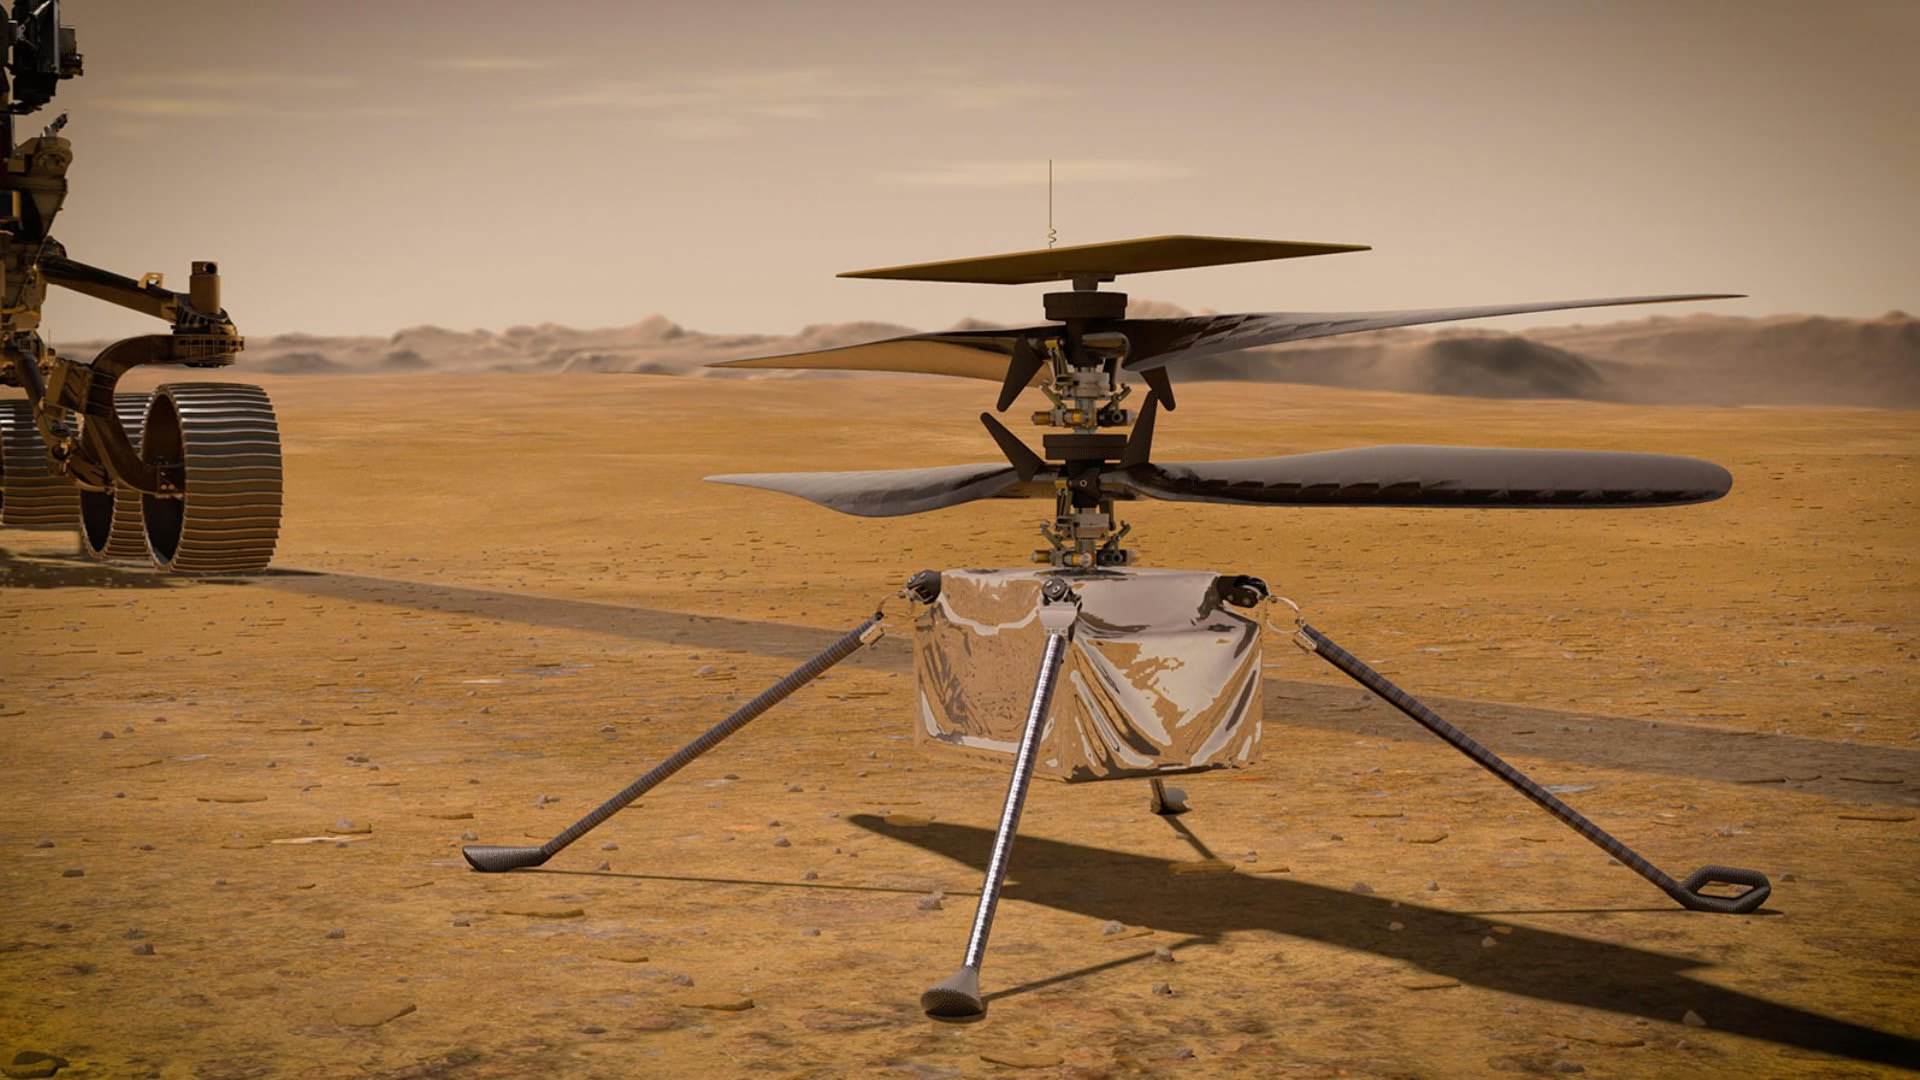 Vrtulník Ingenuity dorazil na Mars spolu s roverem Perseverance